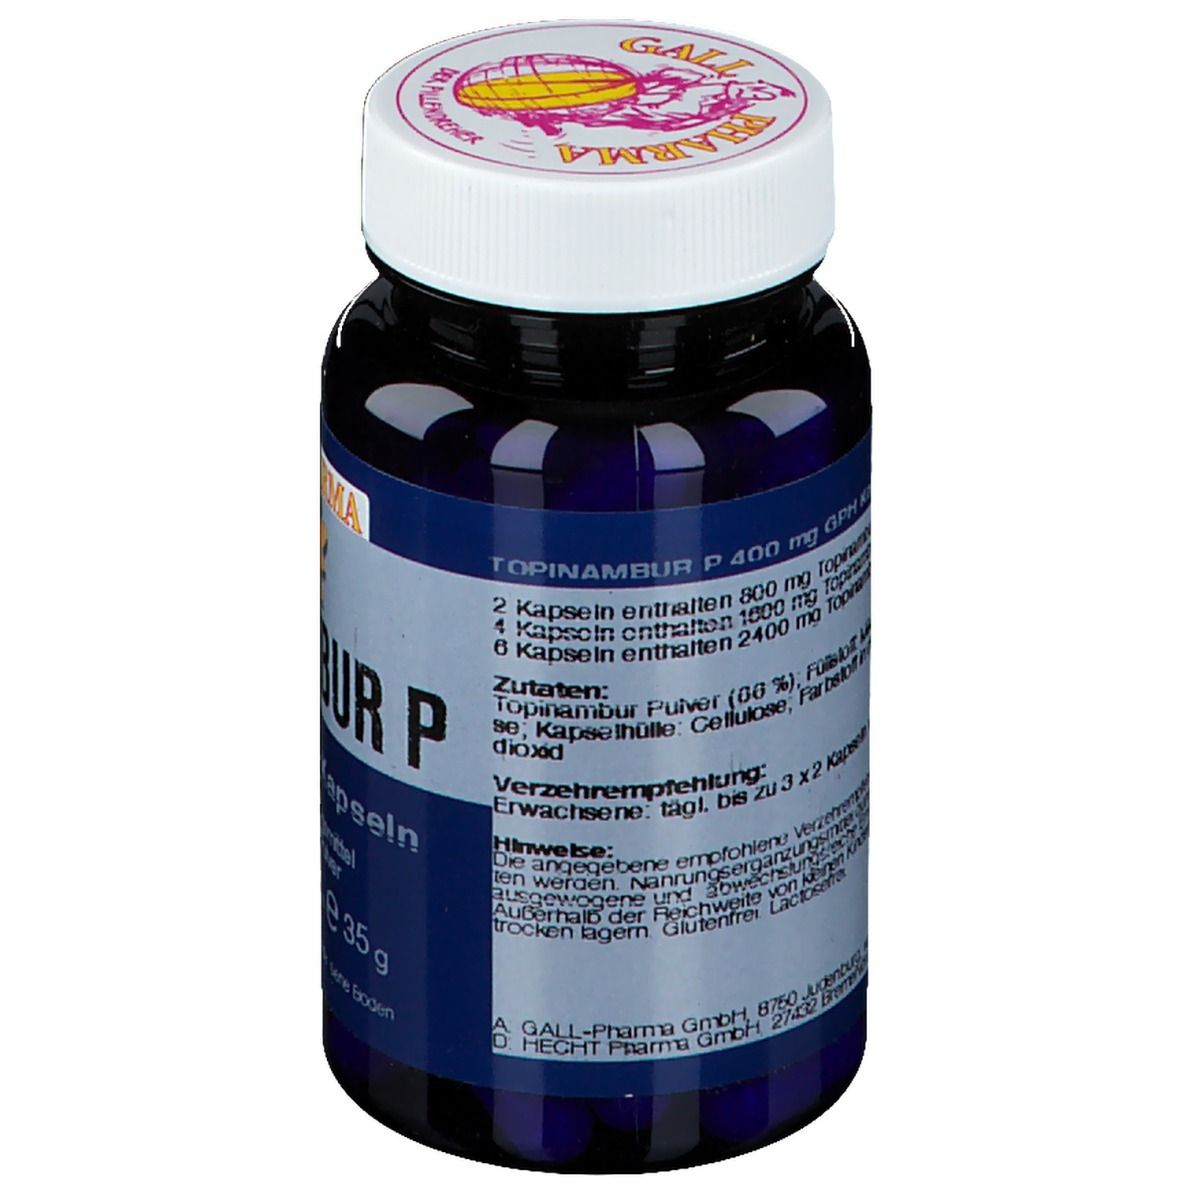 GALL PHARMA Topinambur P 400 mg GPH